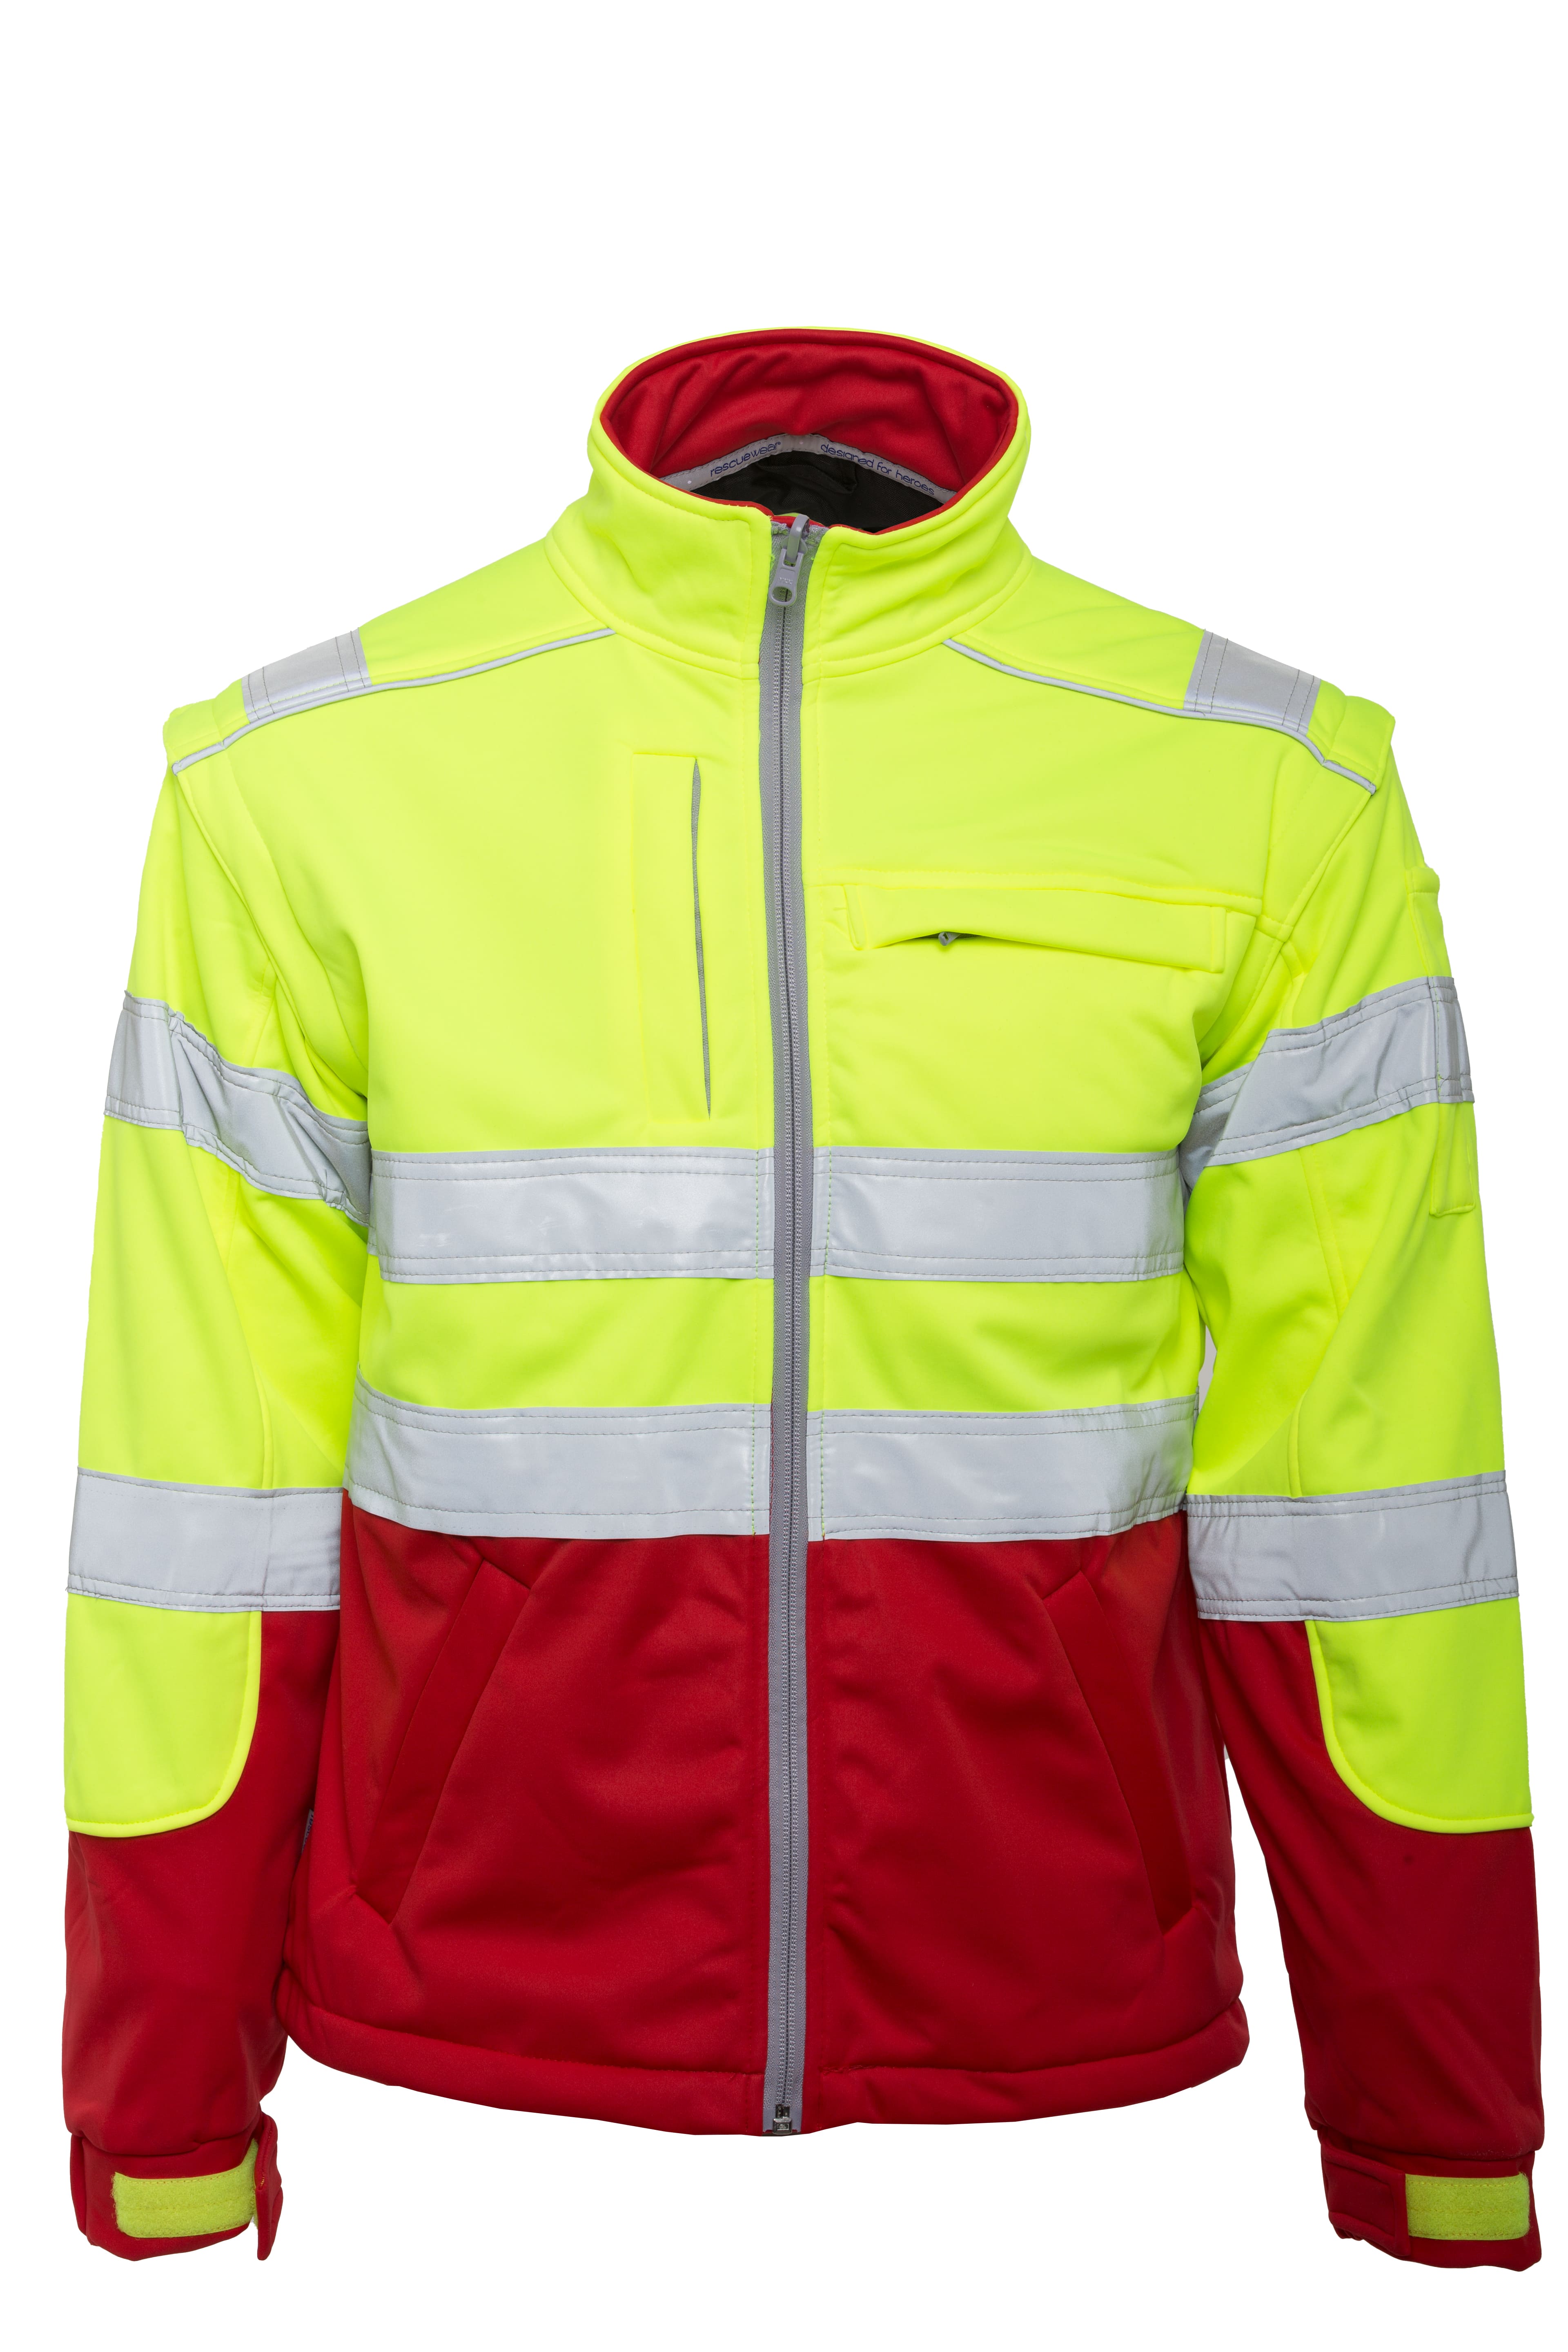 Rescuewear Softshelljacke HiVis Klasse 3 Rot / Neon Gelb - 5XL